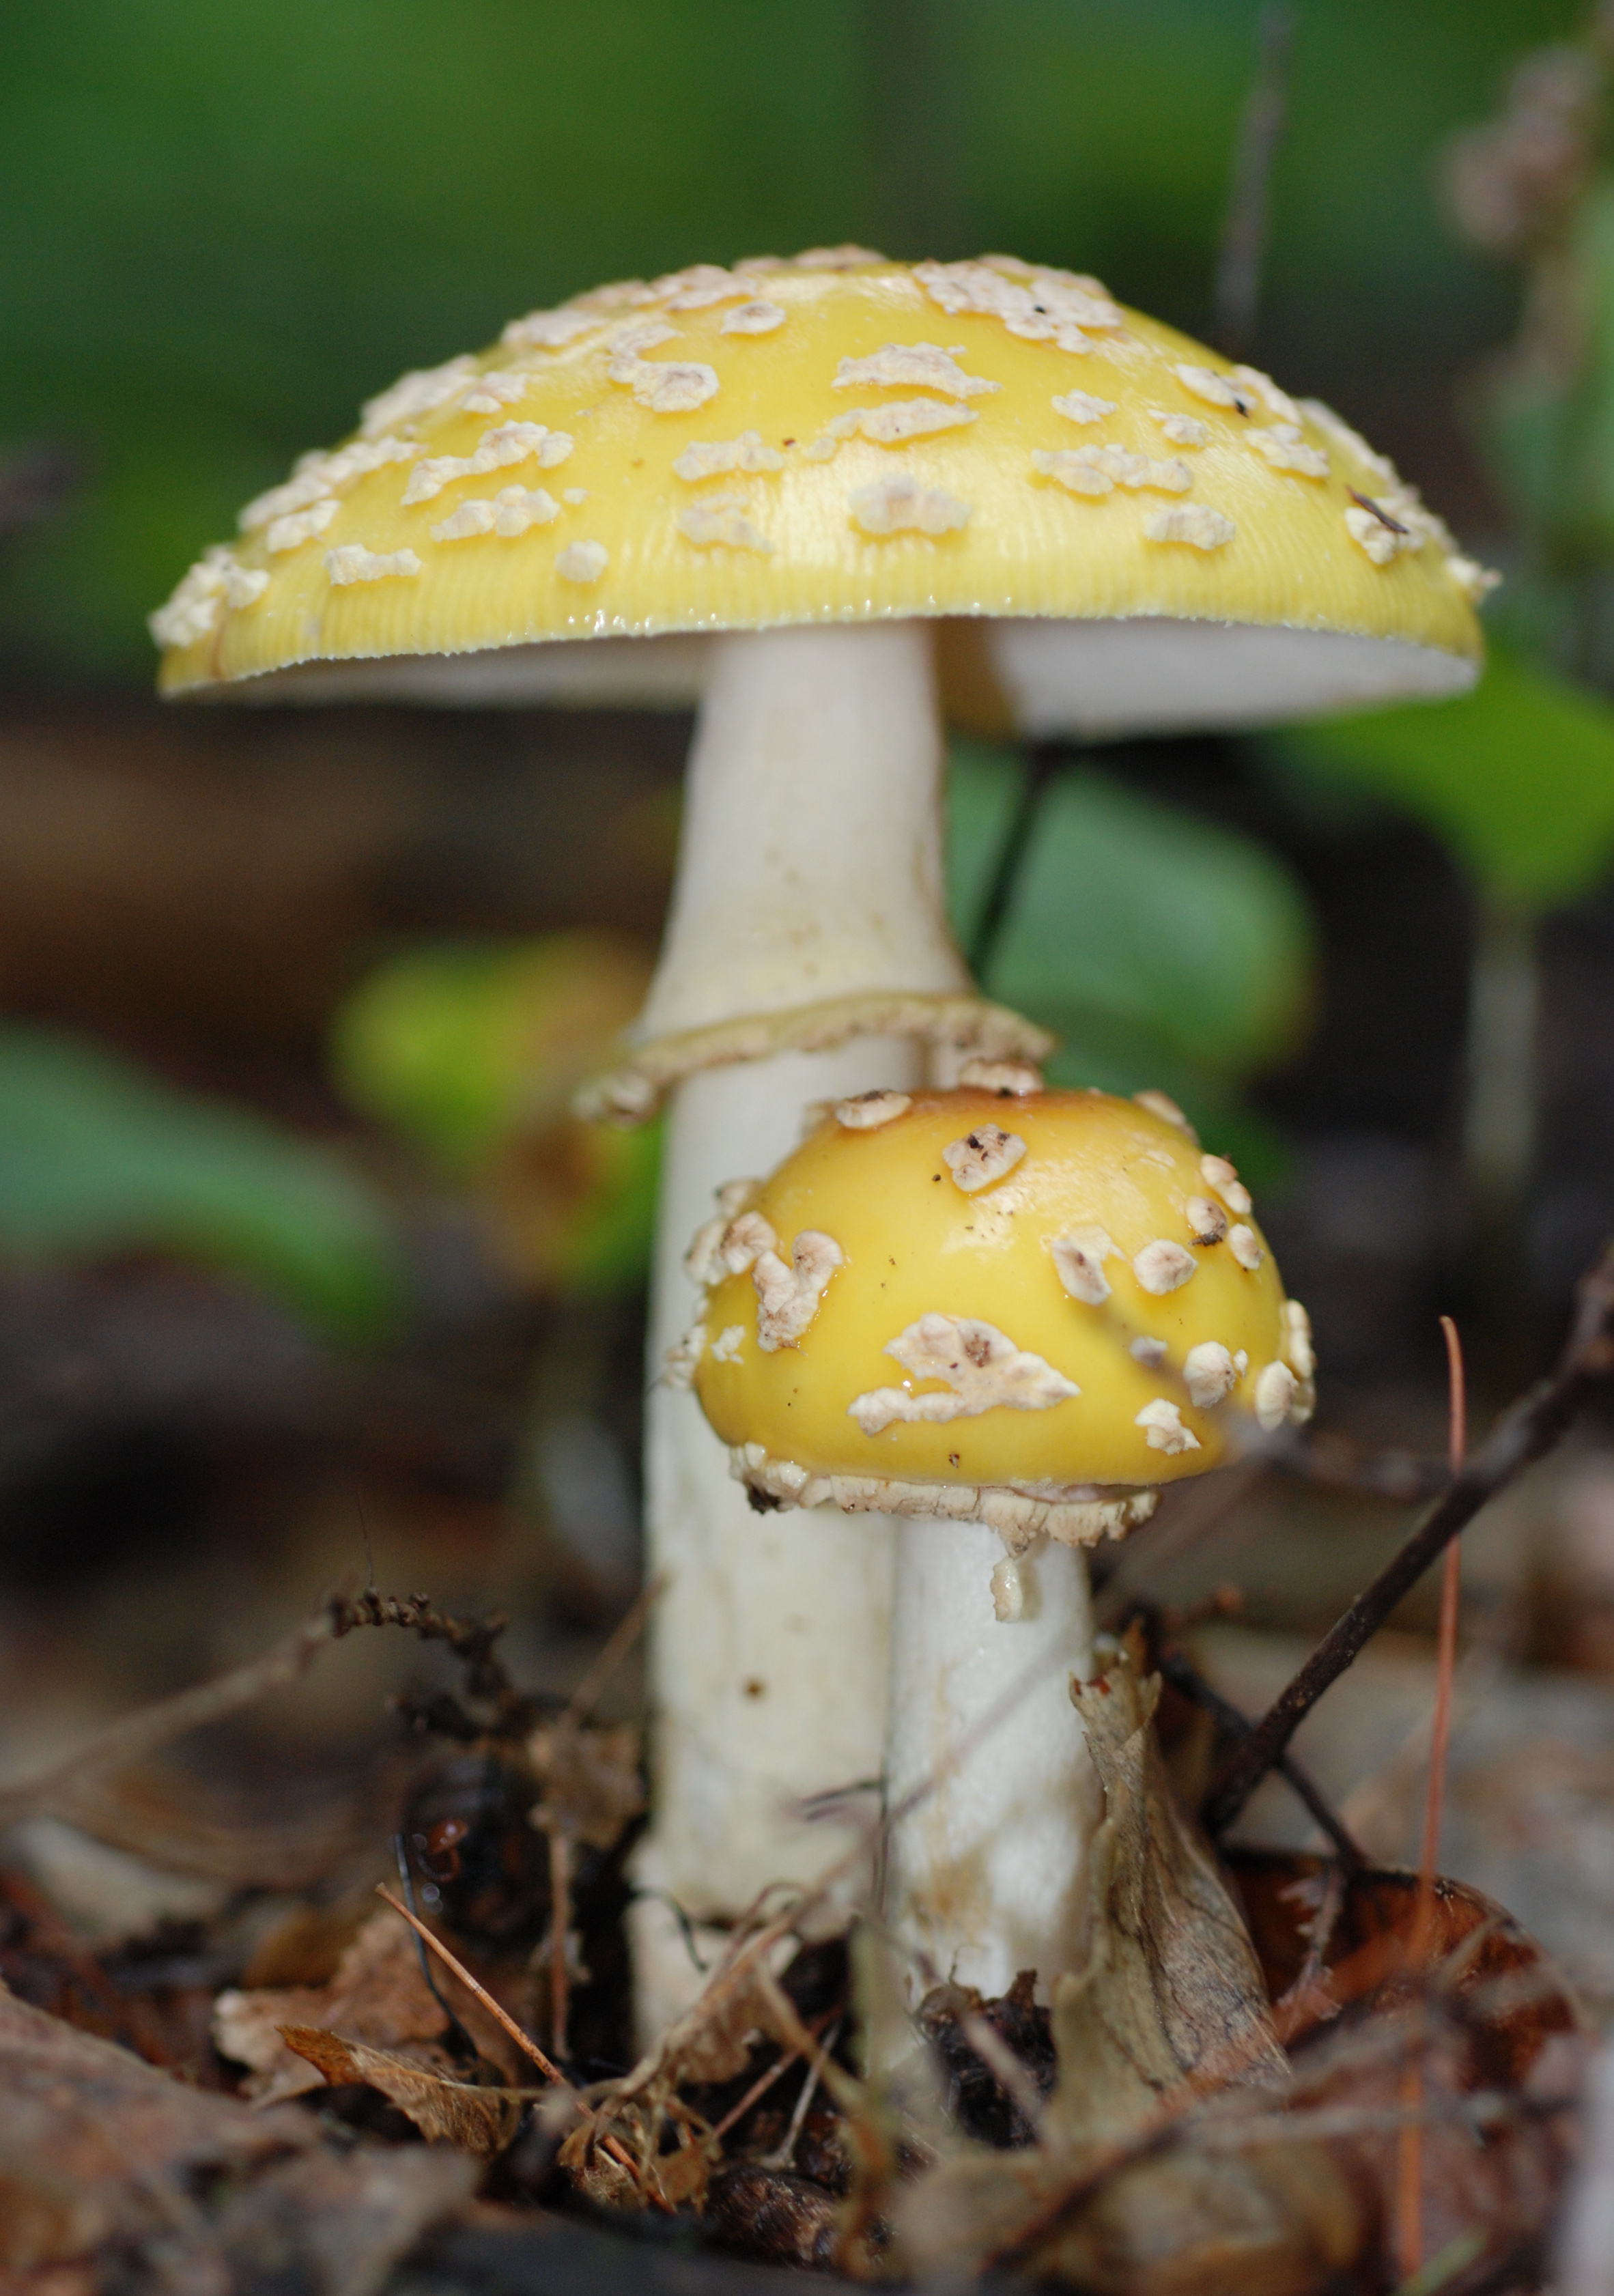 Amanita article from the Granite State News – New Hampshire Mushroom ...